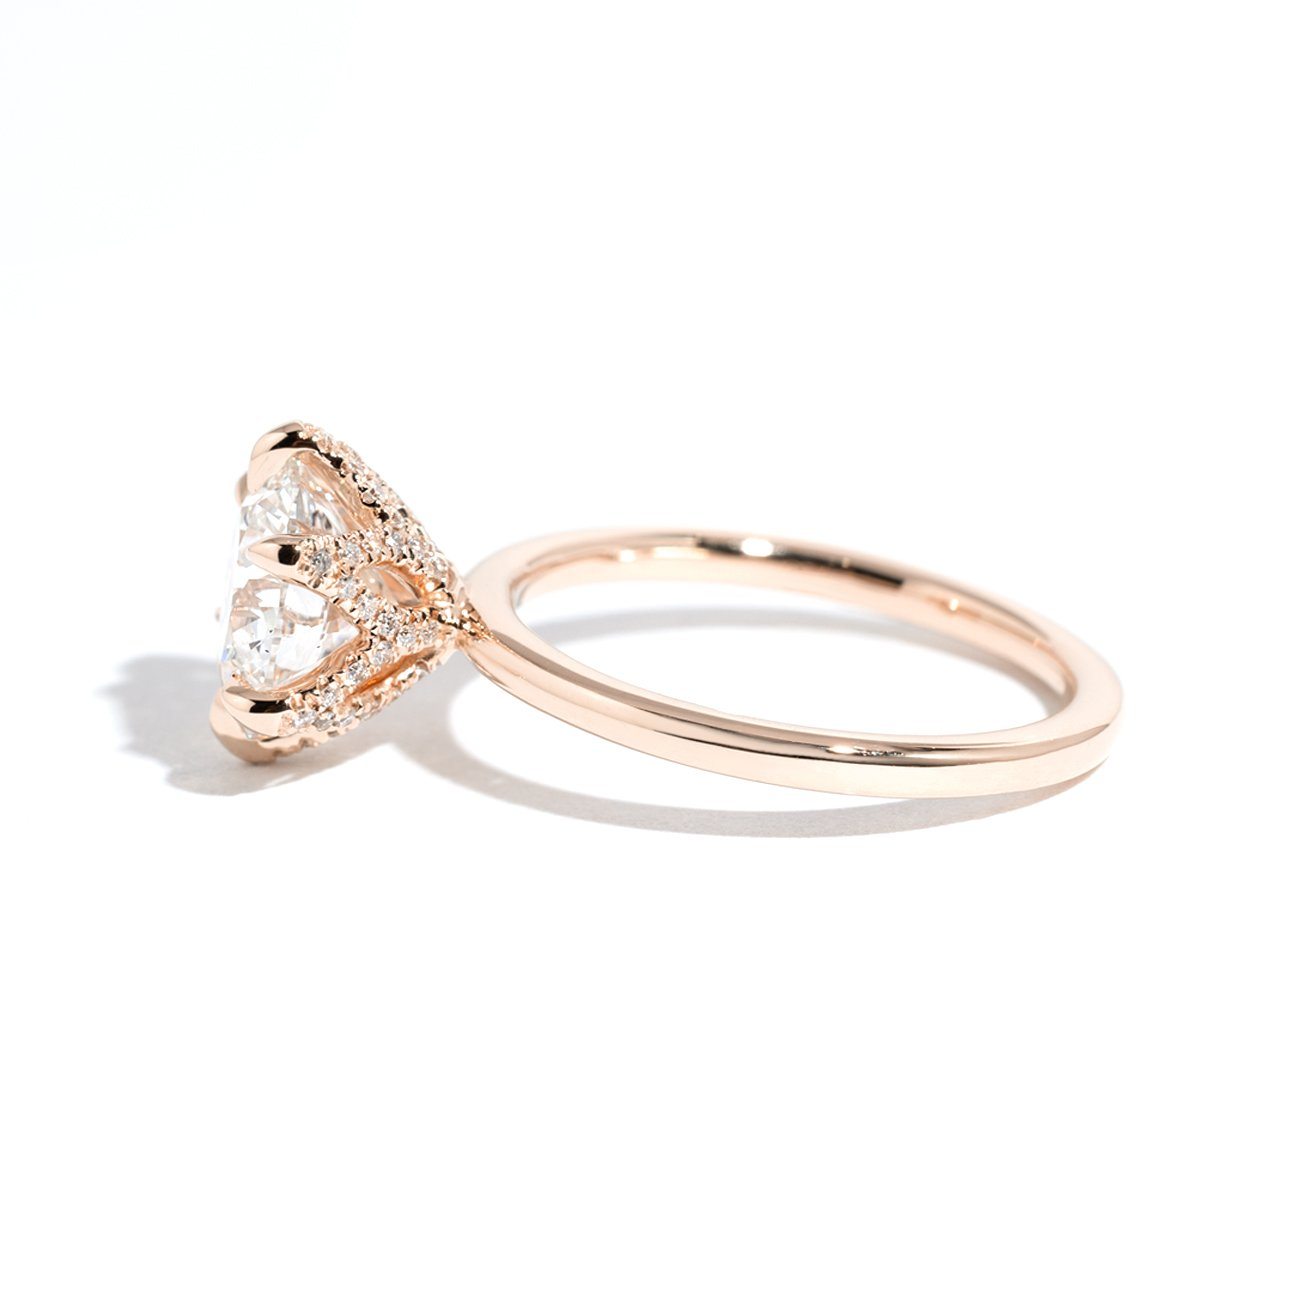 1.6mm Samantha Round High Polish Engagement Rings Princess Bride Diamonds 